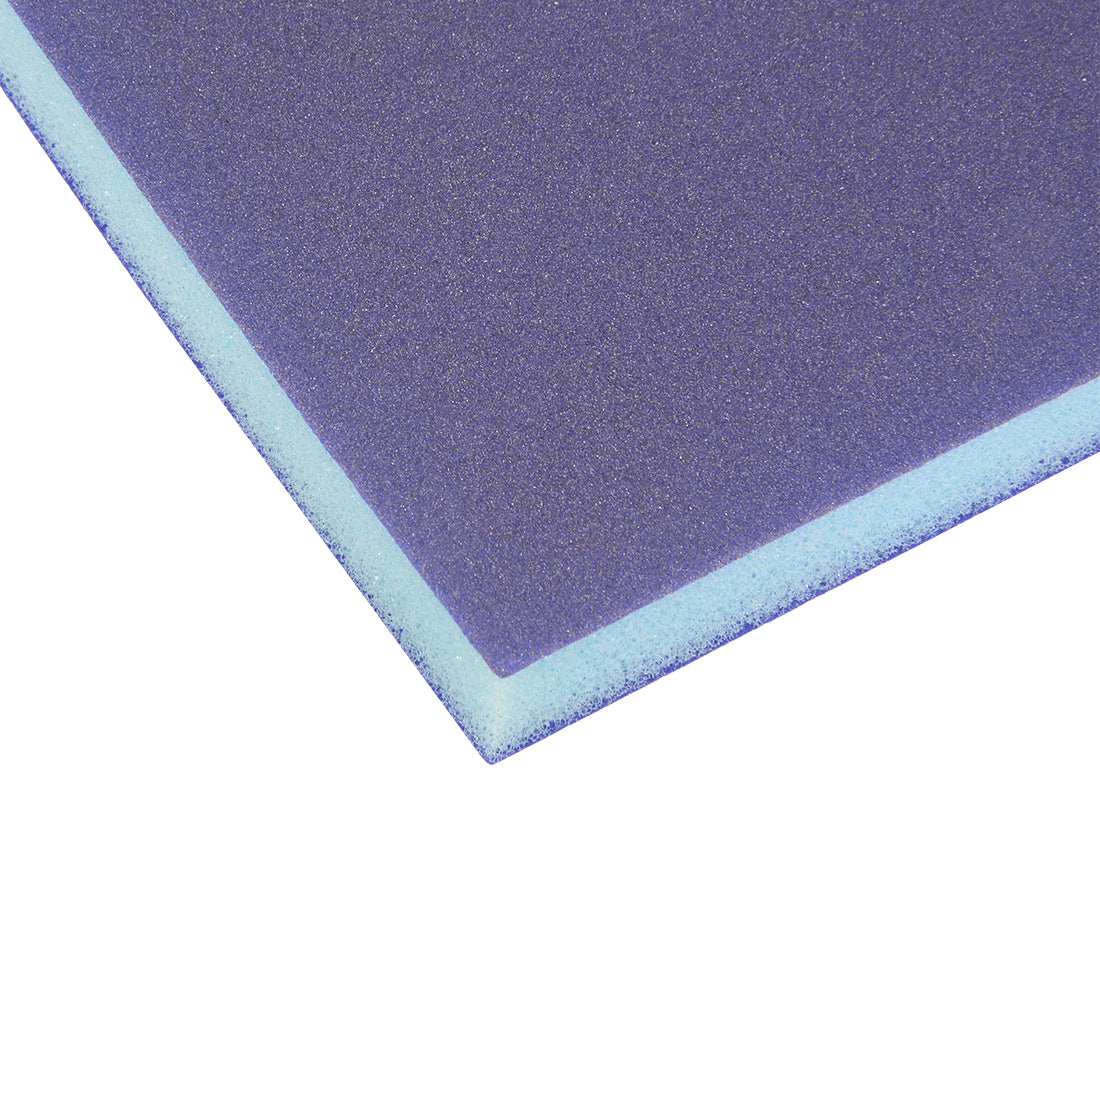 uxcell Uxcell Sanding Sponge, Medium Grit 220 Grit Sanding Block Pad, 4.72" x 3.86" x 0.47" Size Blue 12pcs